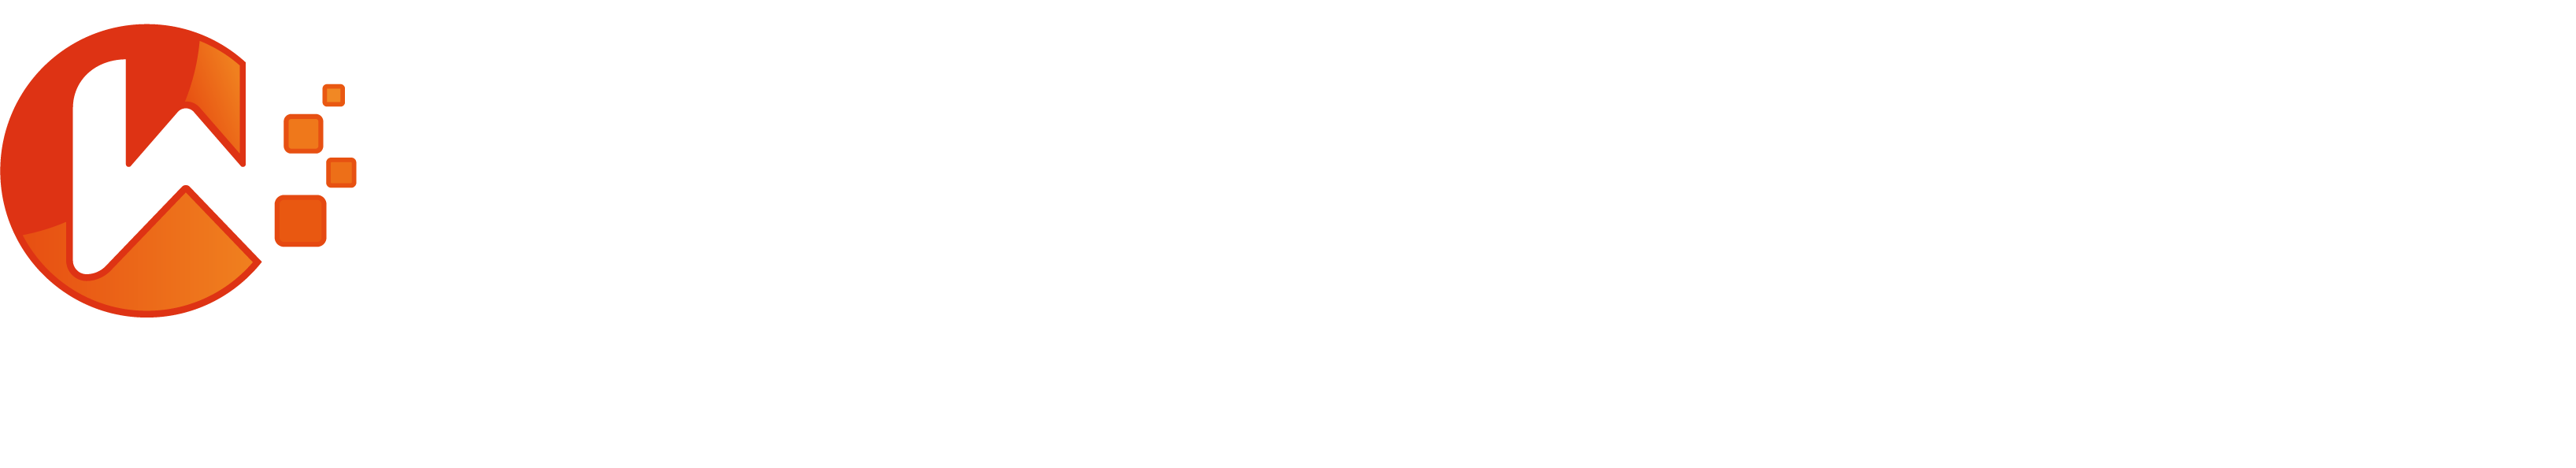 WebCentral Digital Services Agency